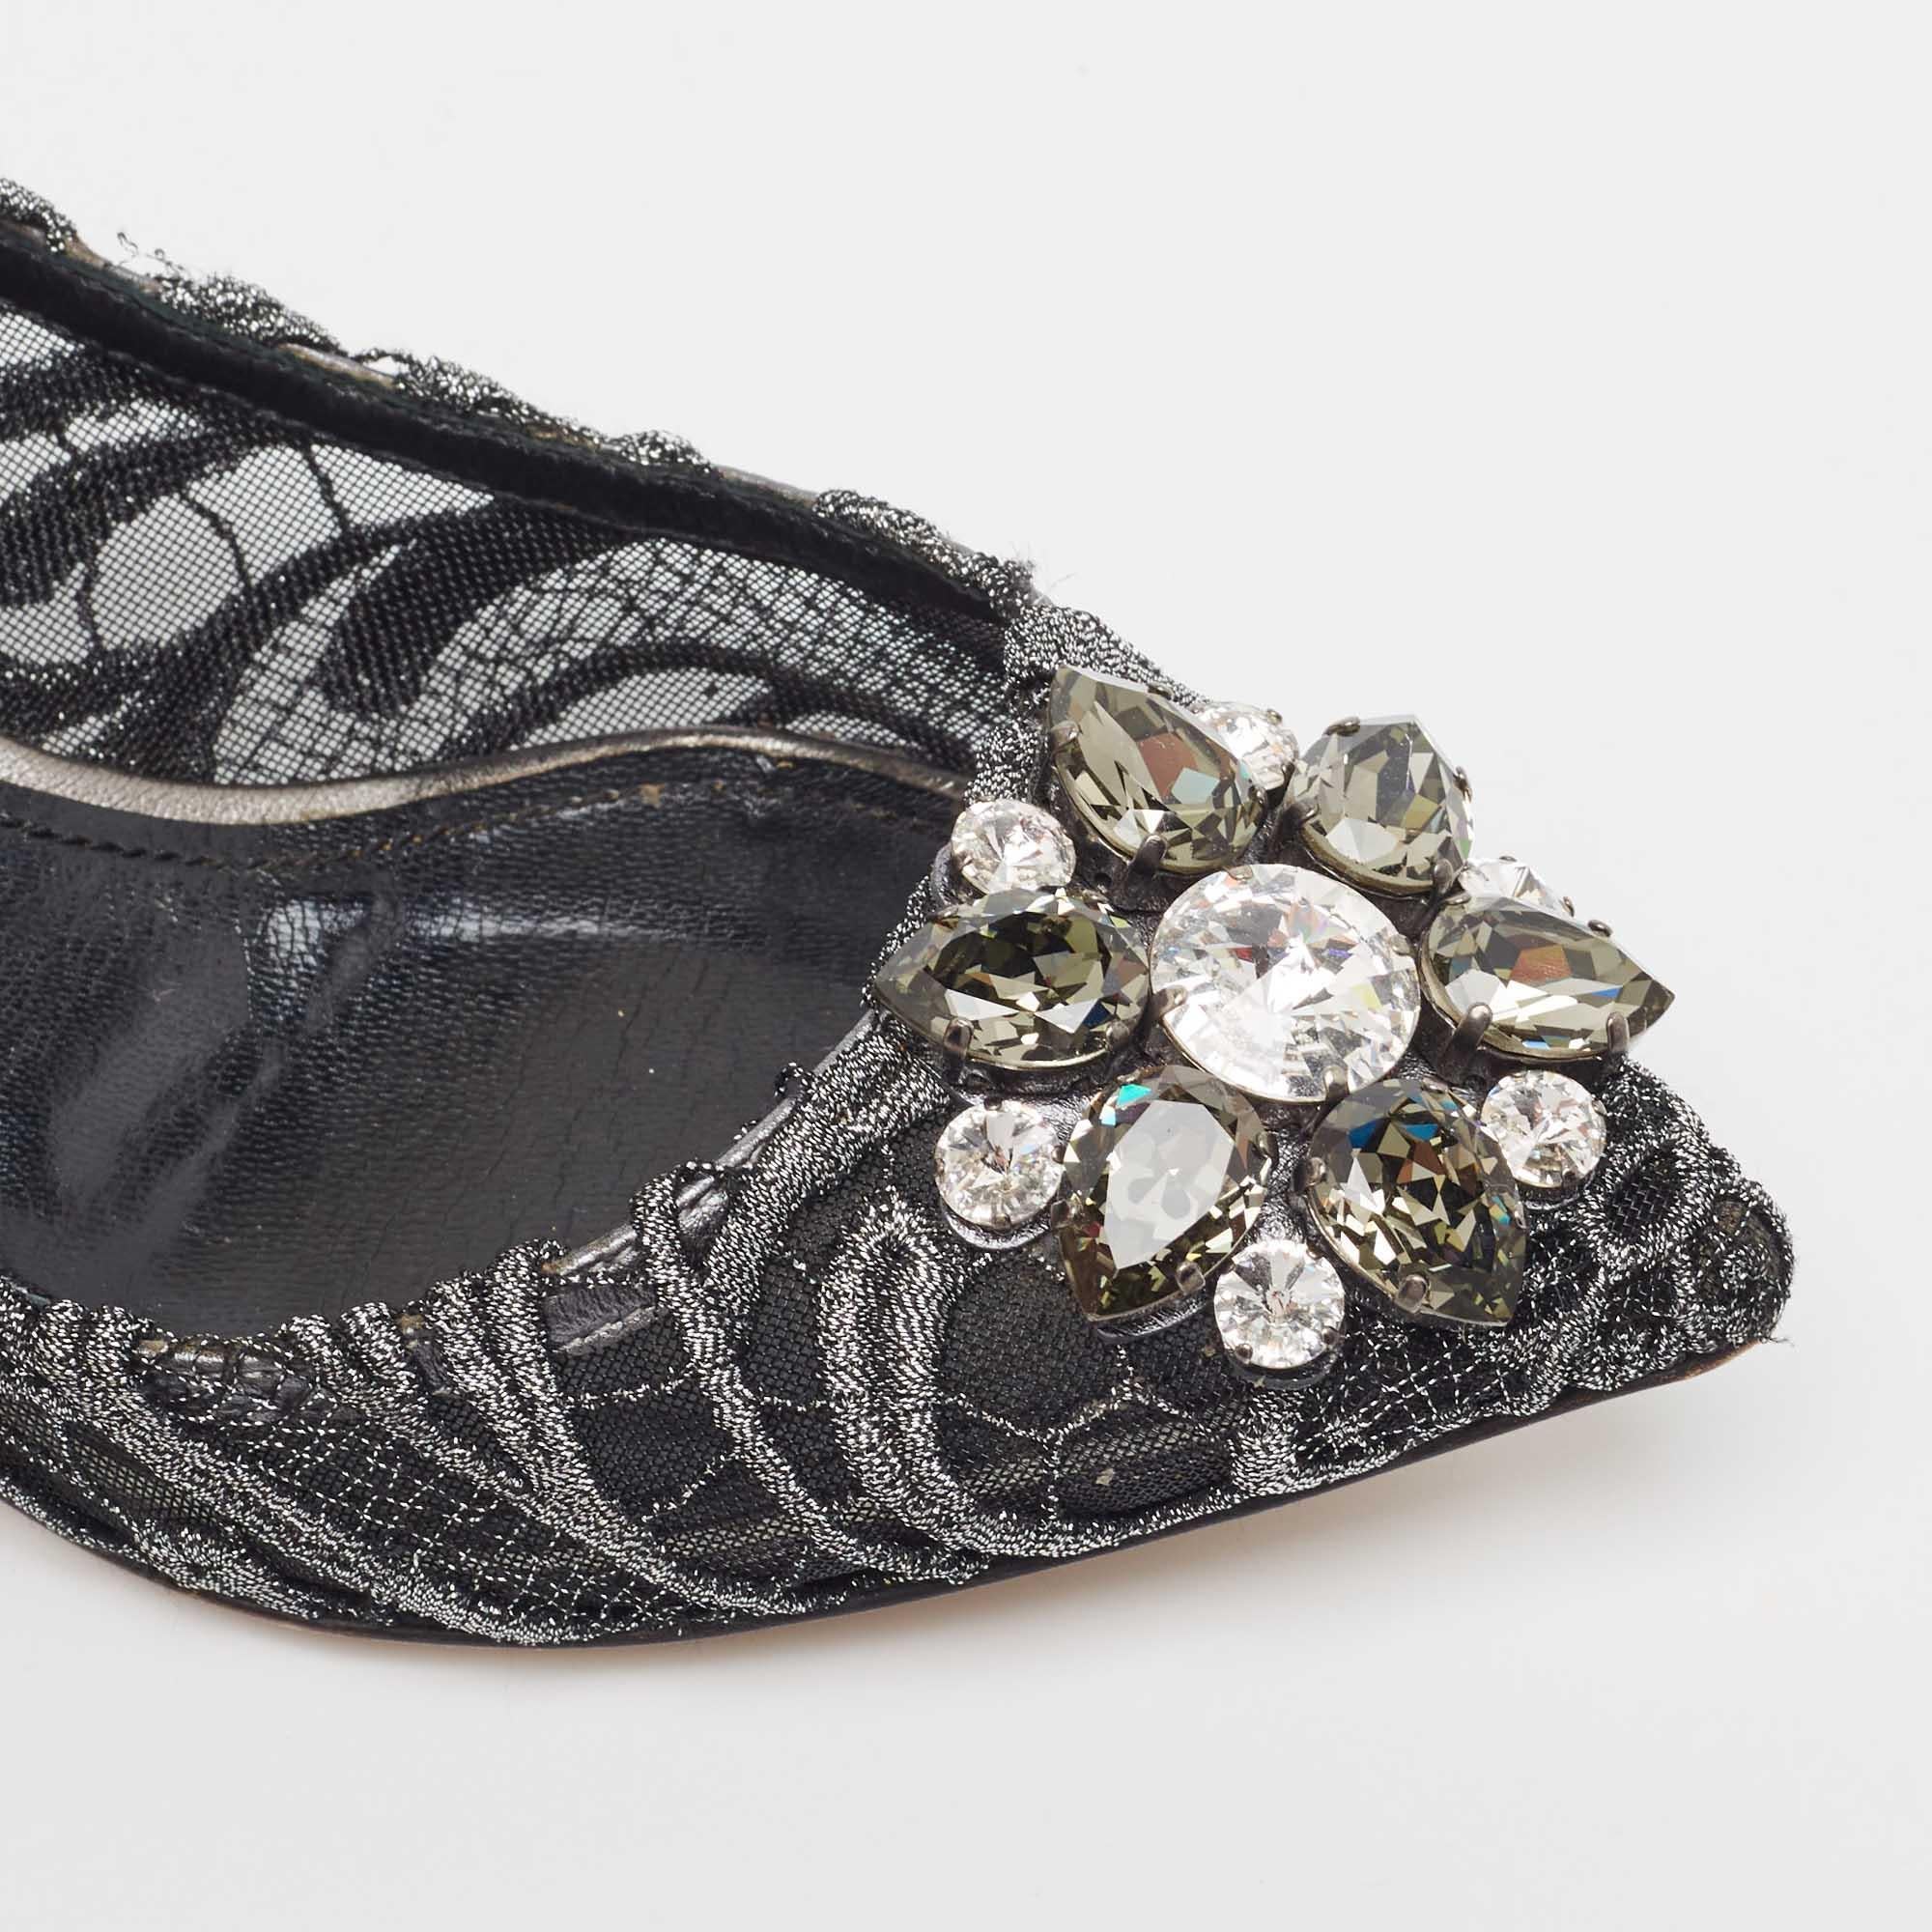 Dolce & Gabbana Silver/Black Lace Bellucci Crystal Embellished Kitten Heel Pumps For Sale 3